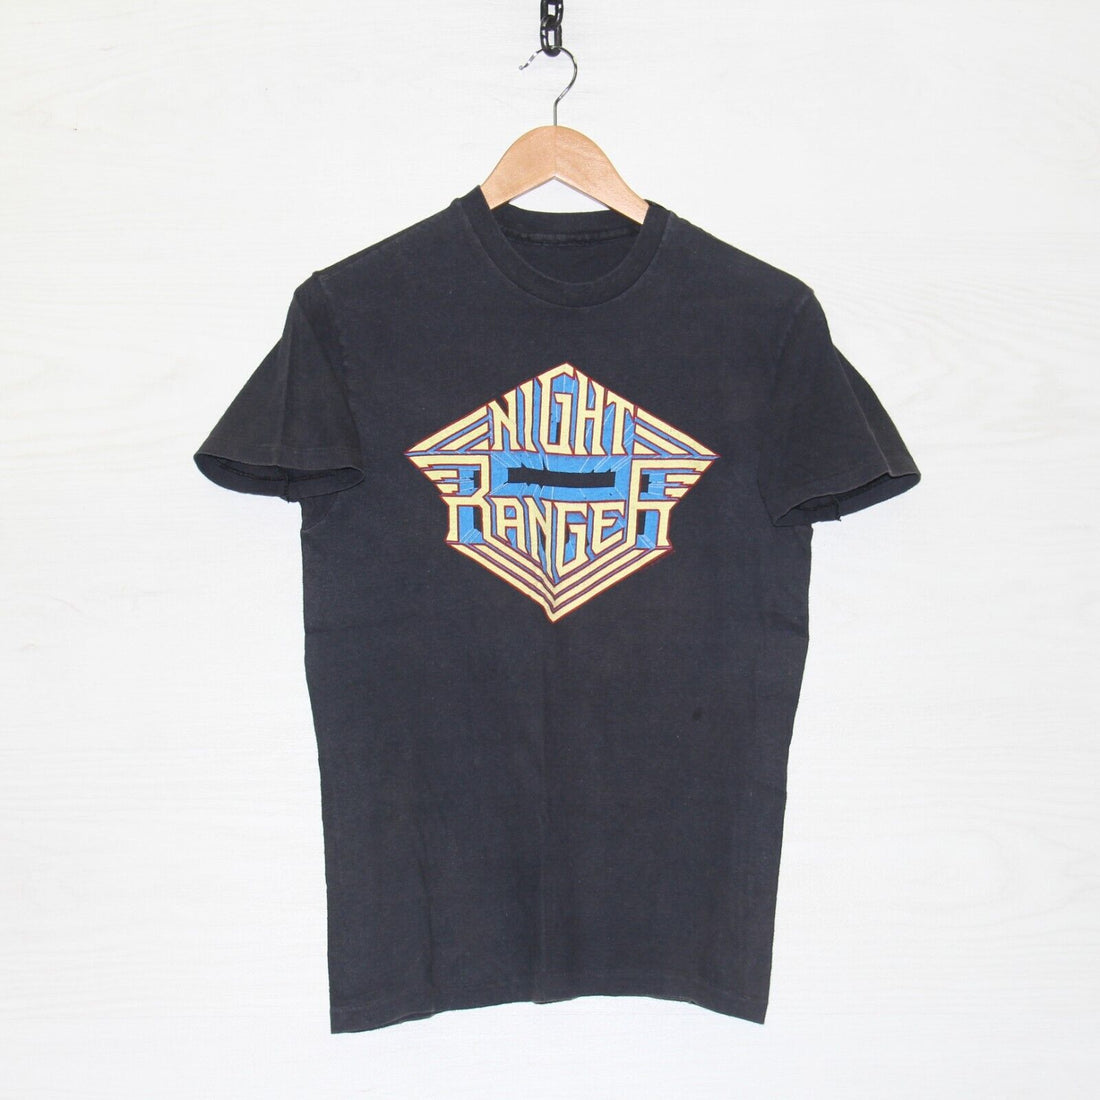 Vintage Night Ranger Dawn Patrol Tour T-Shirt Small Black 1983 80s